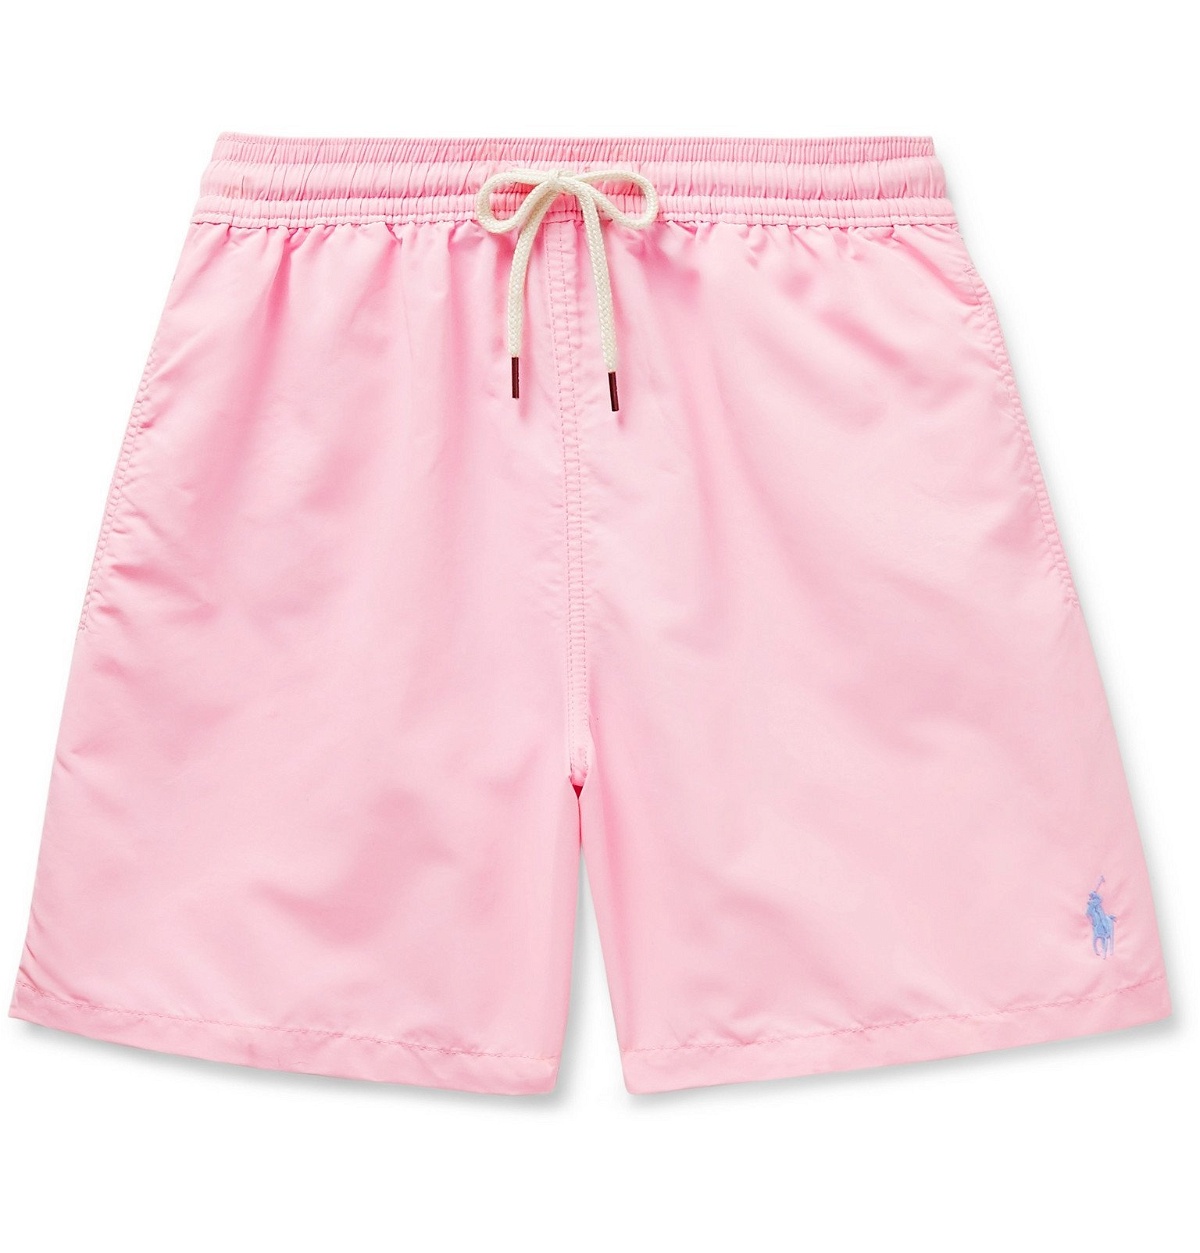 Skyldig Ulejlighed Efterforskning Polo Ralph Lauren - Traveler Mid-Length Swim Shorts - Pink Polo Ralph Lauren